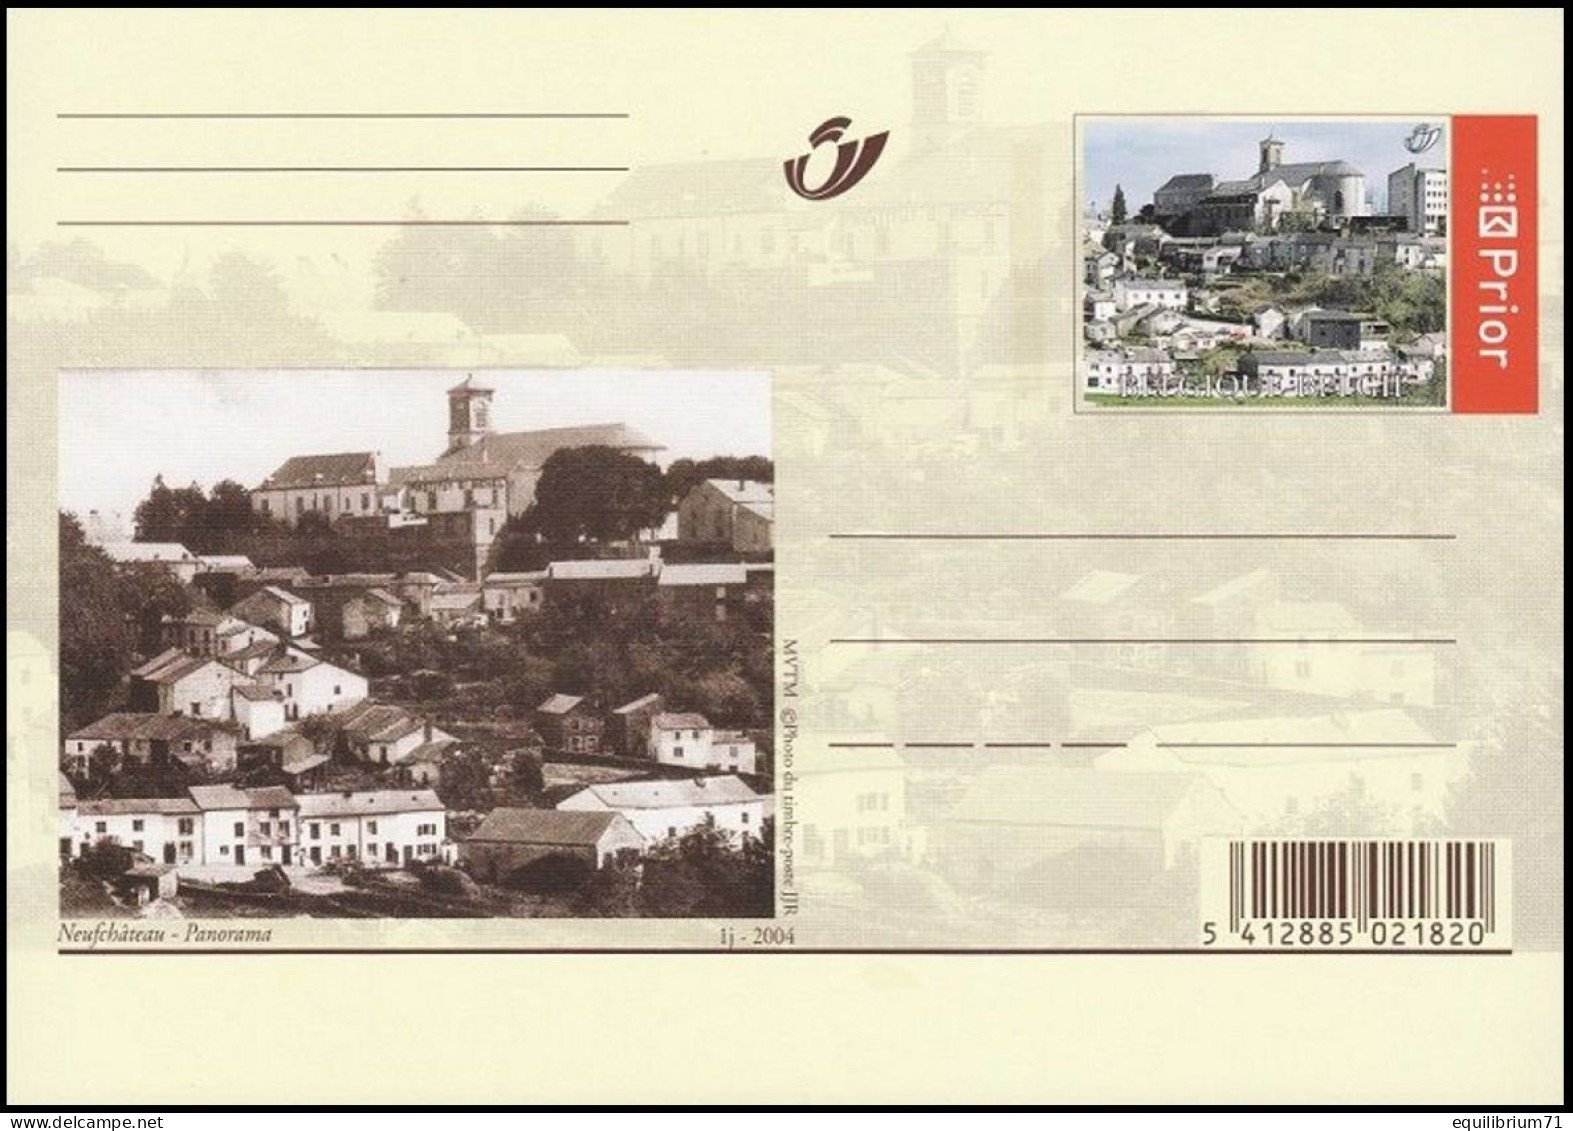 CP/BK88** - Cartes illustrées/Geïllustreerde briefkaarten/Illustrierte Postkarten - Autrefois & maintenant/Vroeger en nu